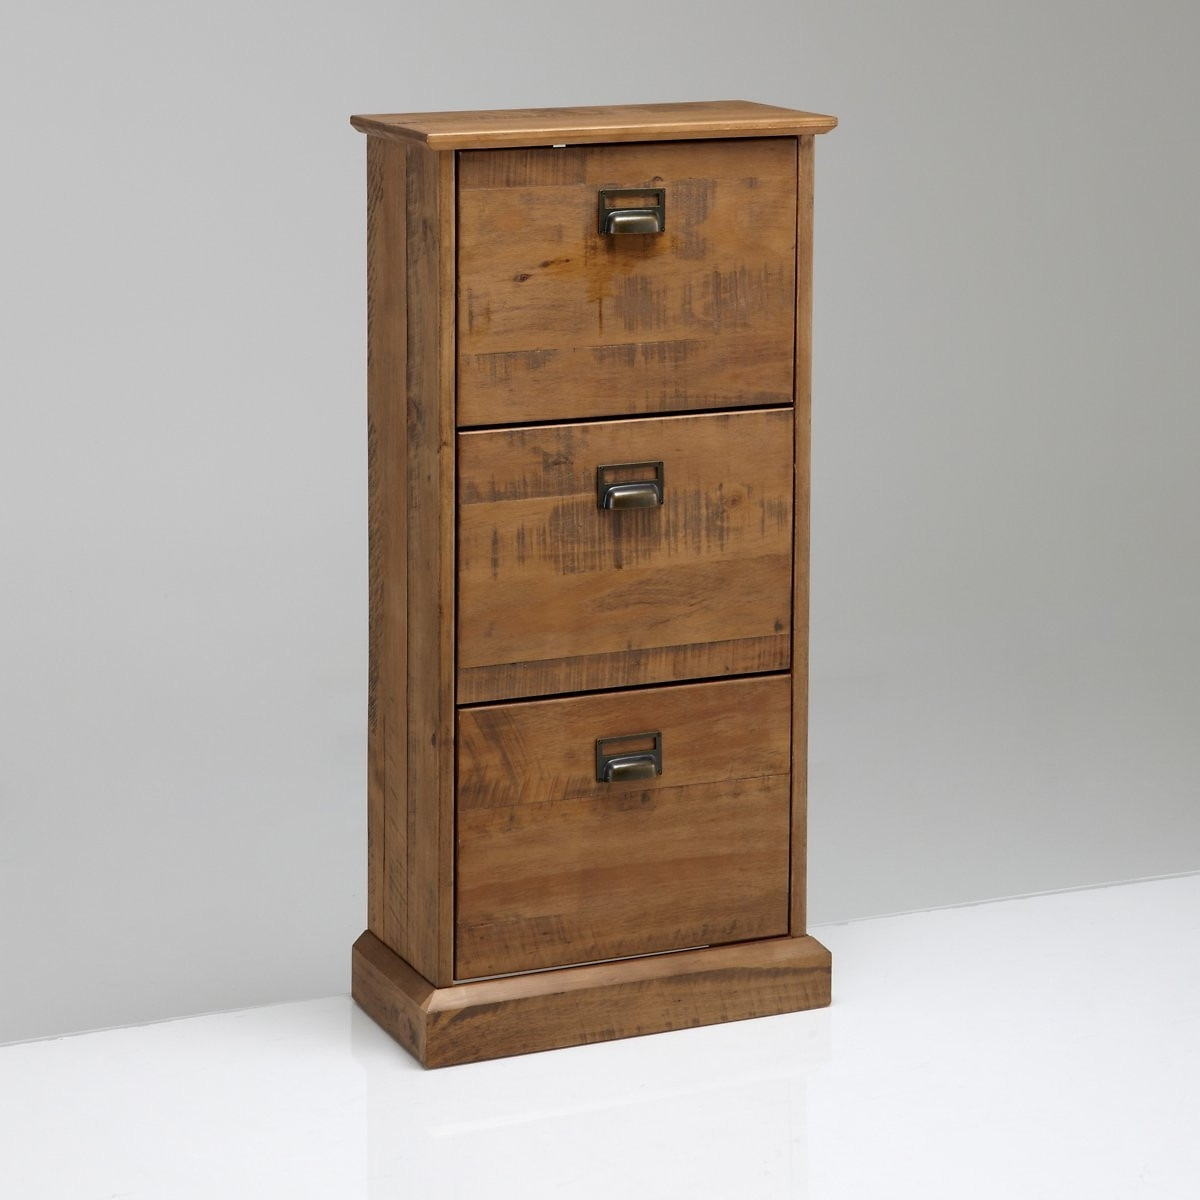 Lindley Solid Pine 3-Drawer Shoe Cabinet - image 1